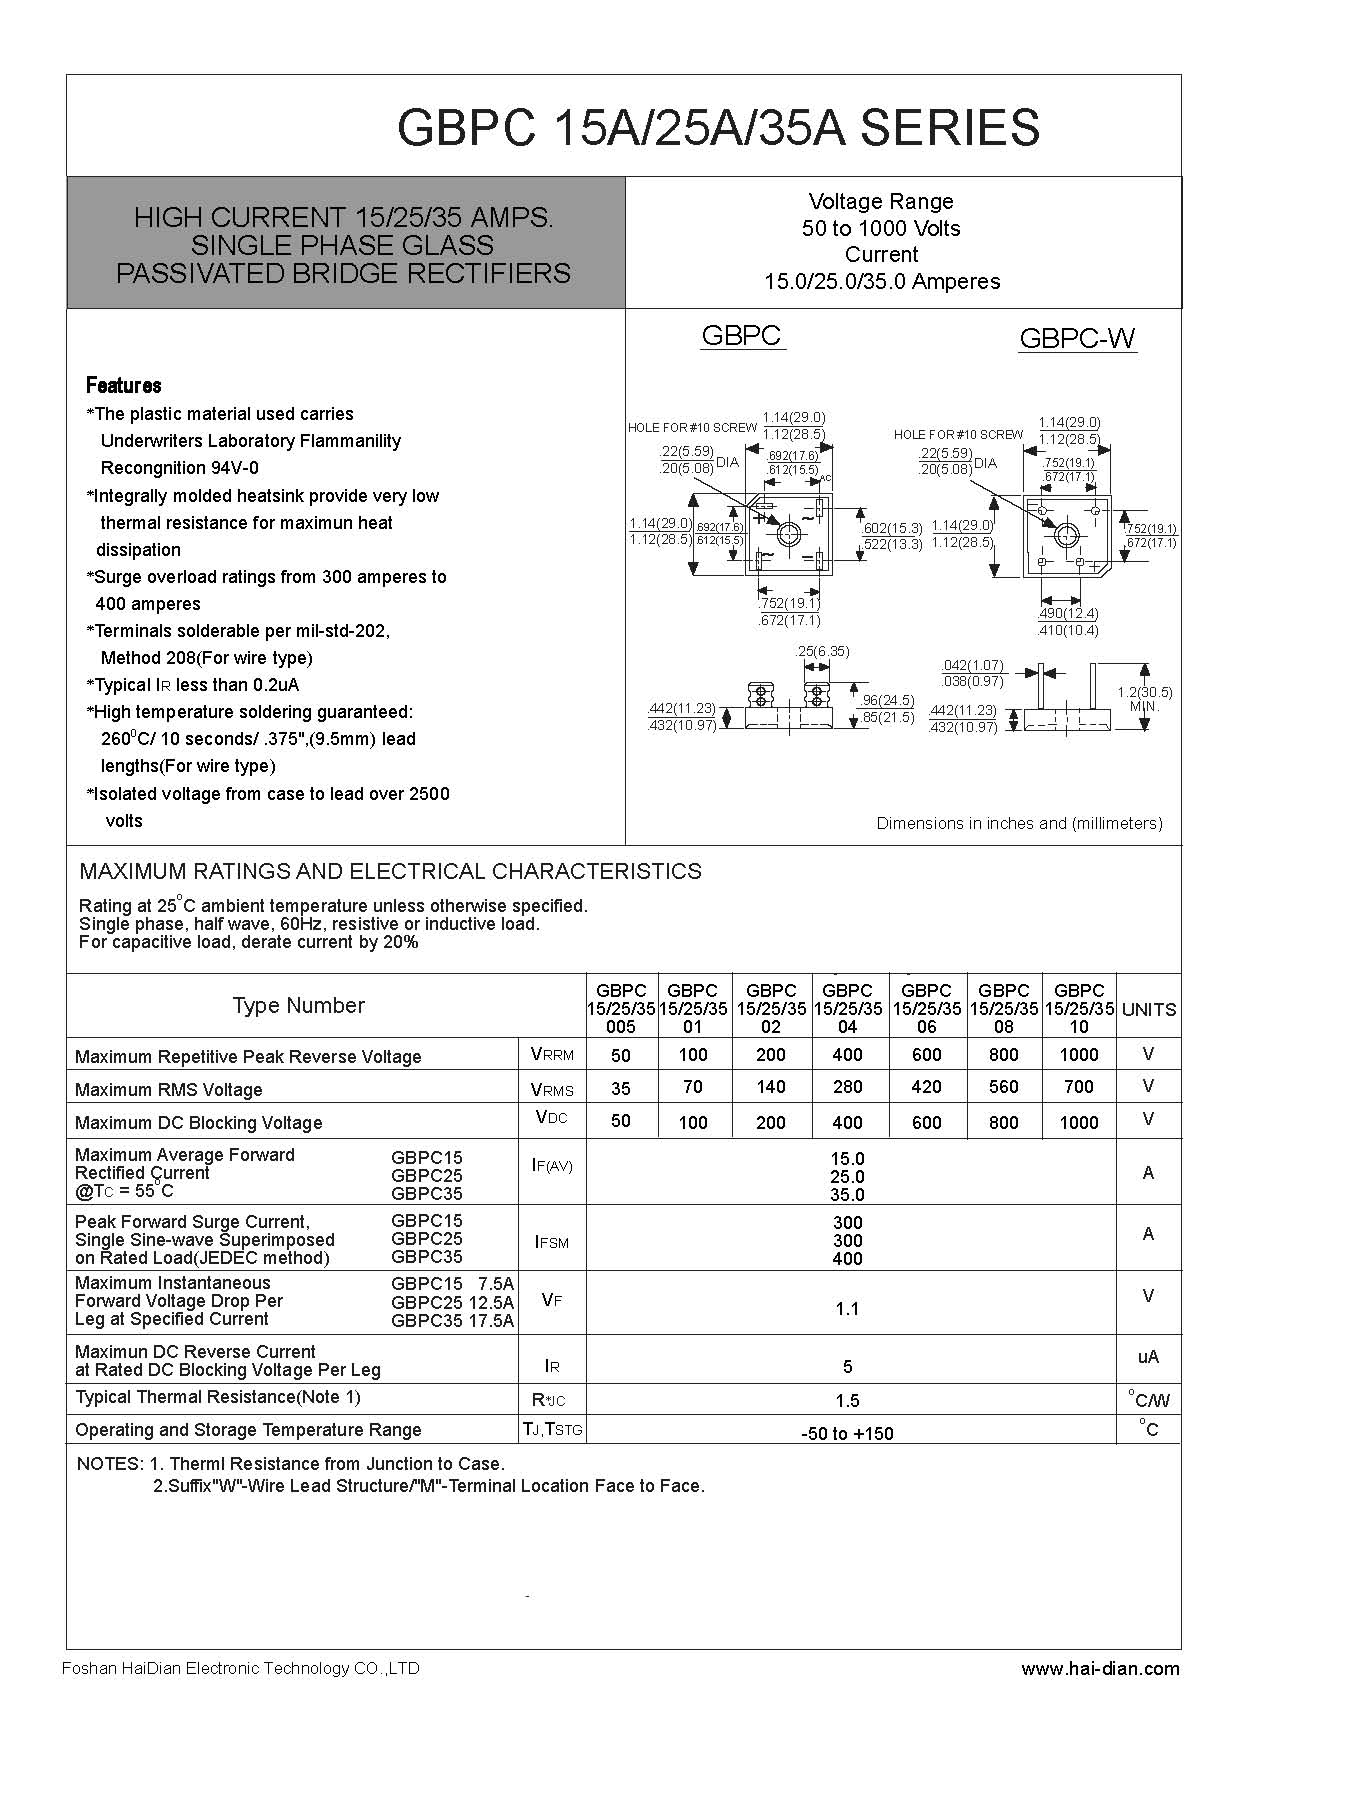 GBPC3508桥式整流器(整流桥堆)-- 佛山海电电子科技有限公司